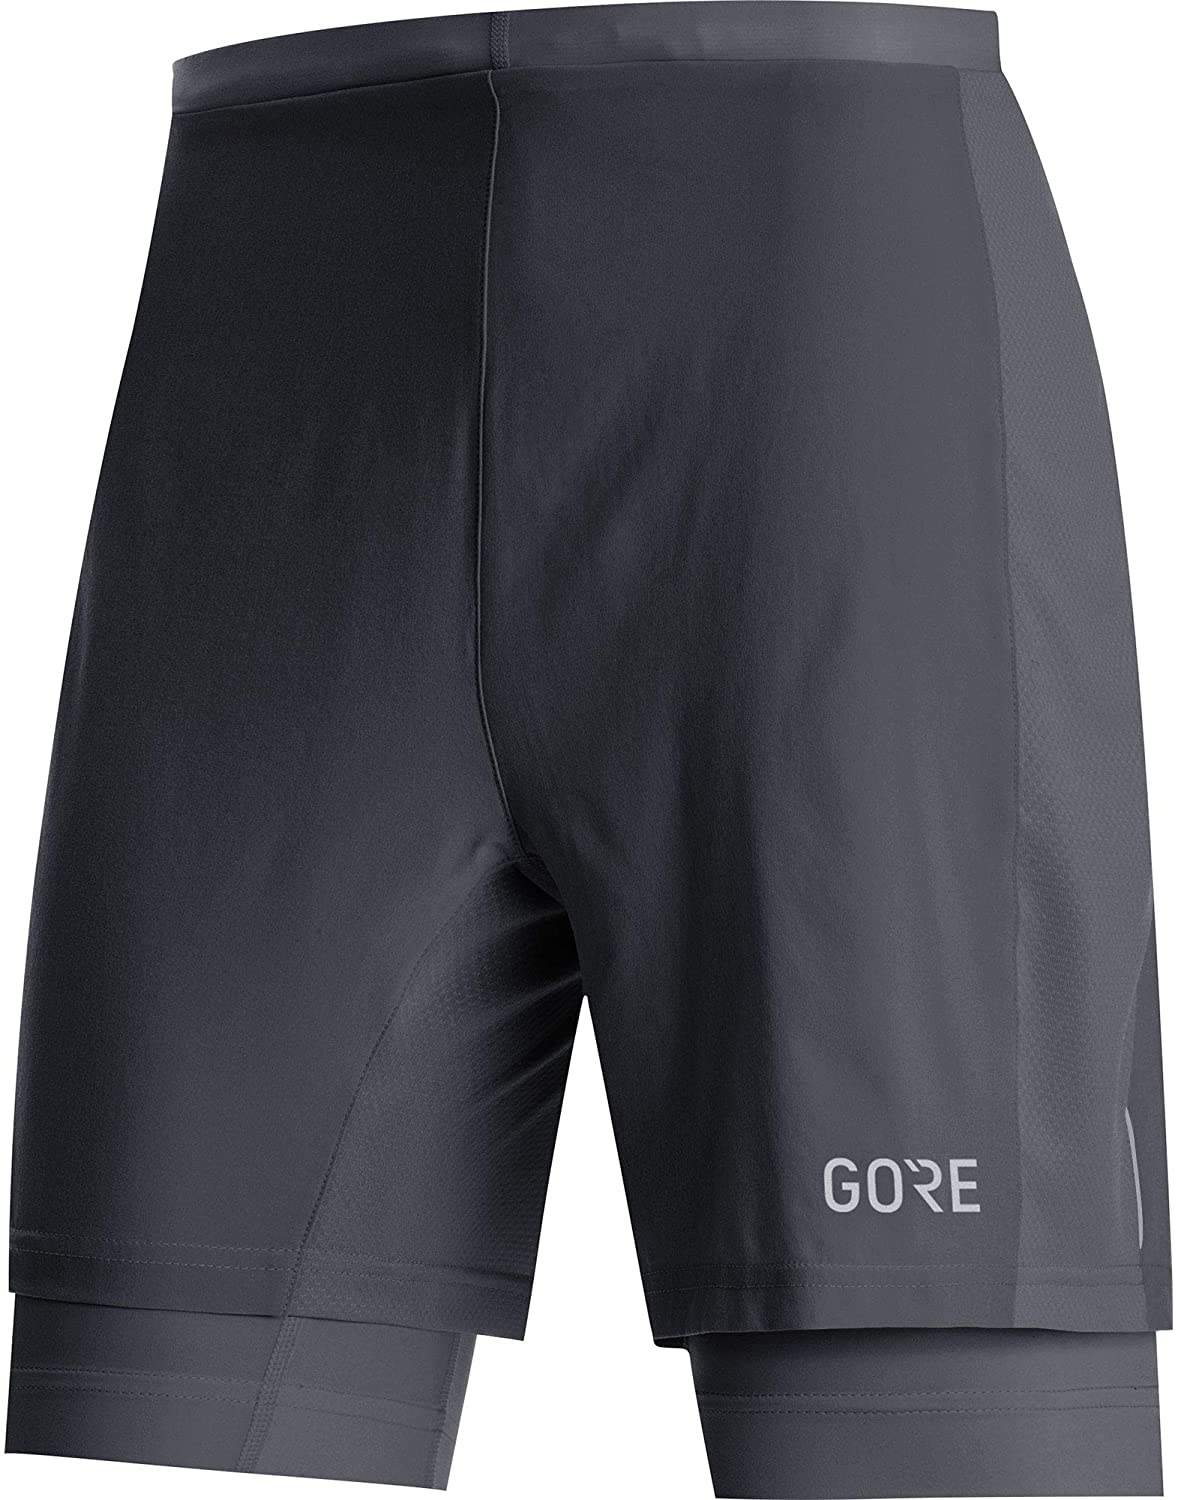 Gore Wear R5 2in1 Shorts - Running shorts - Men's